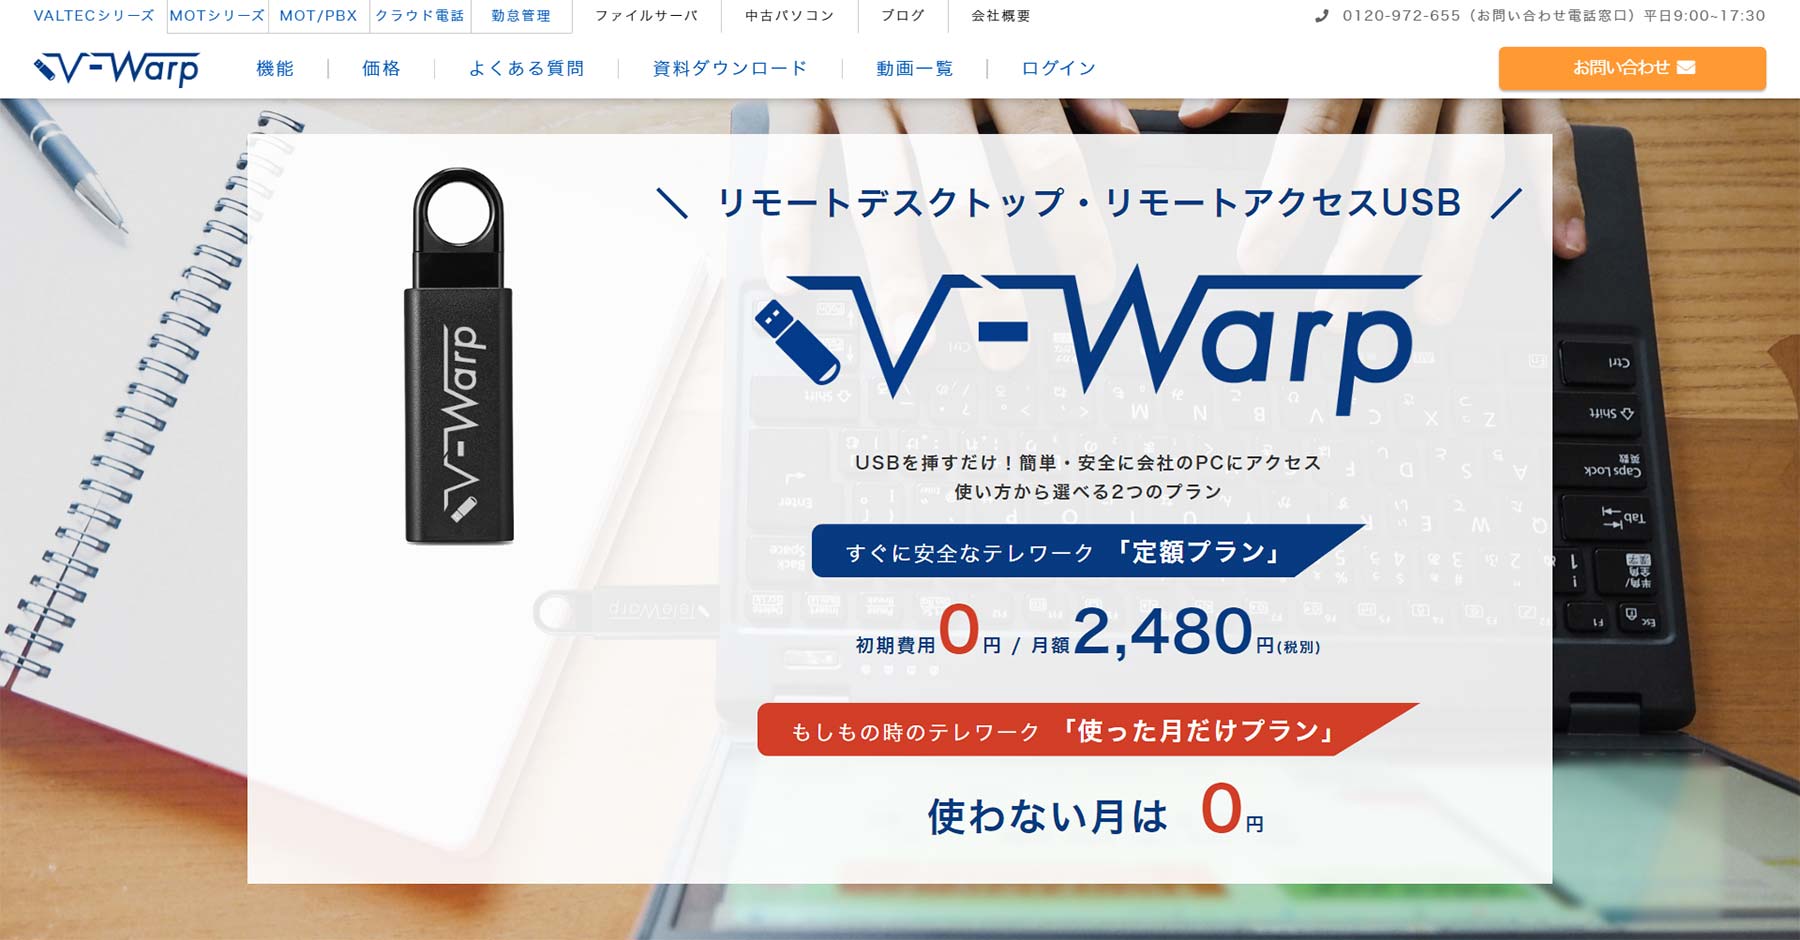 V-Warp公式Webサイト